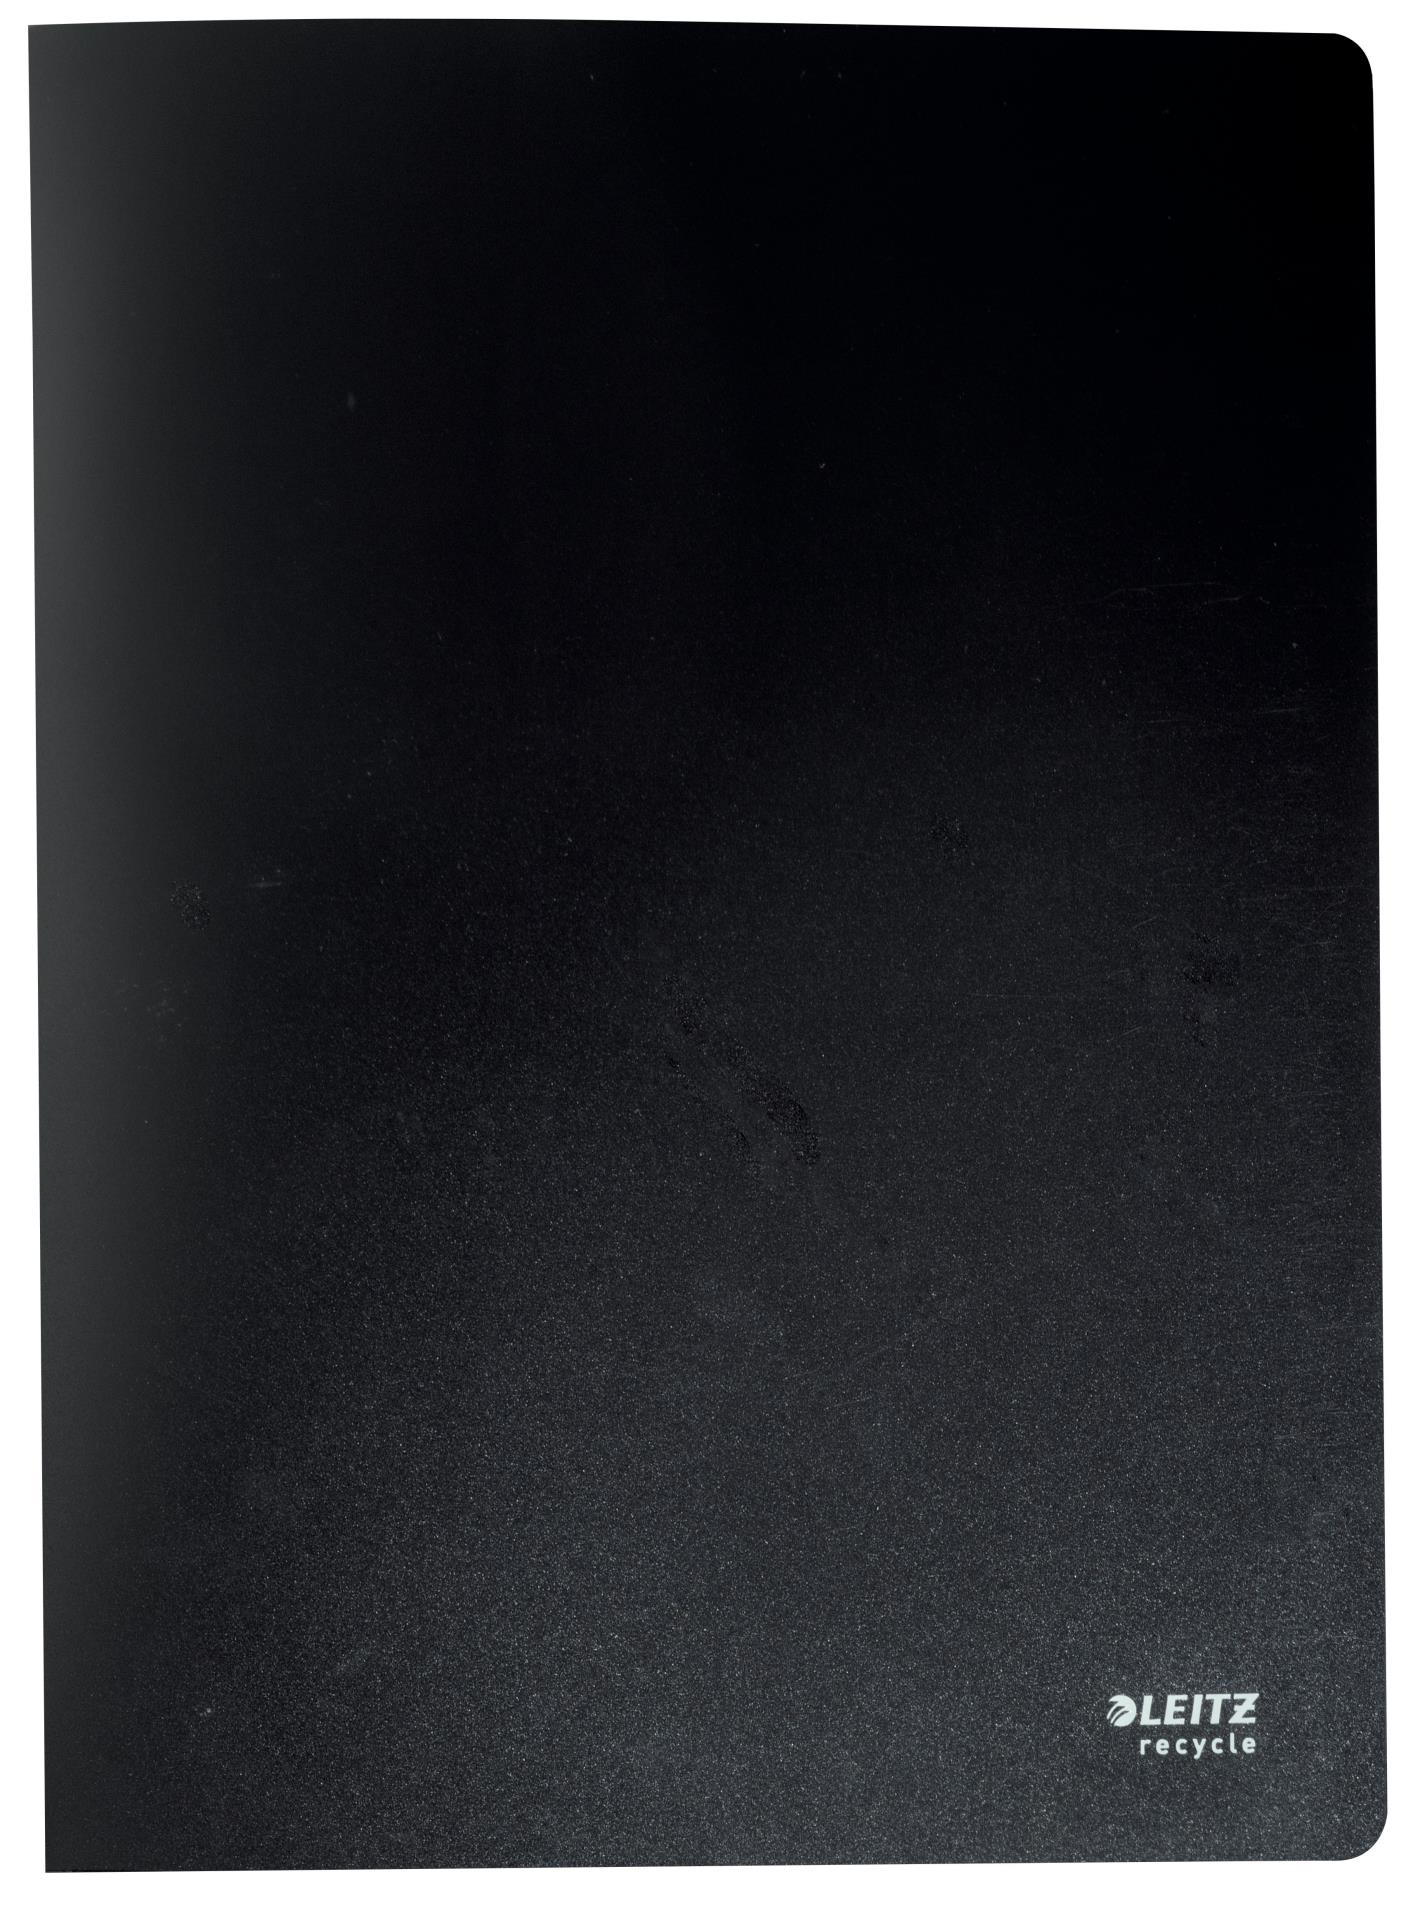 Katalogová kniha Leitz RECYCLE - A4, 20 kapes, ekologická, černá